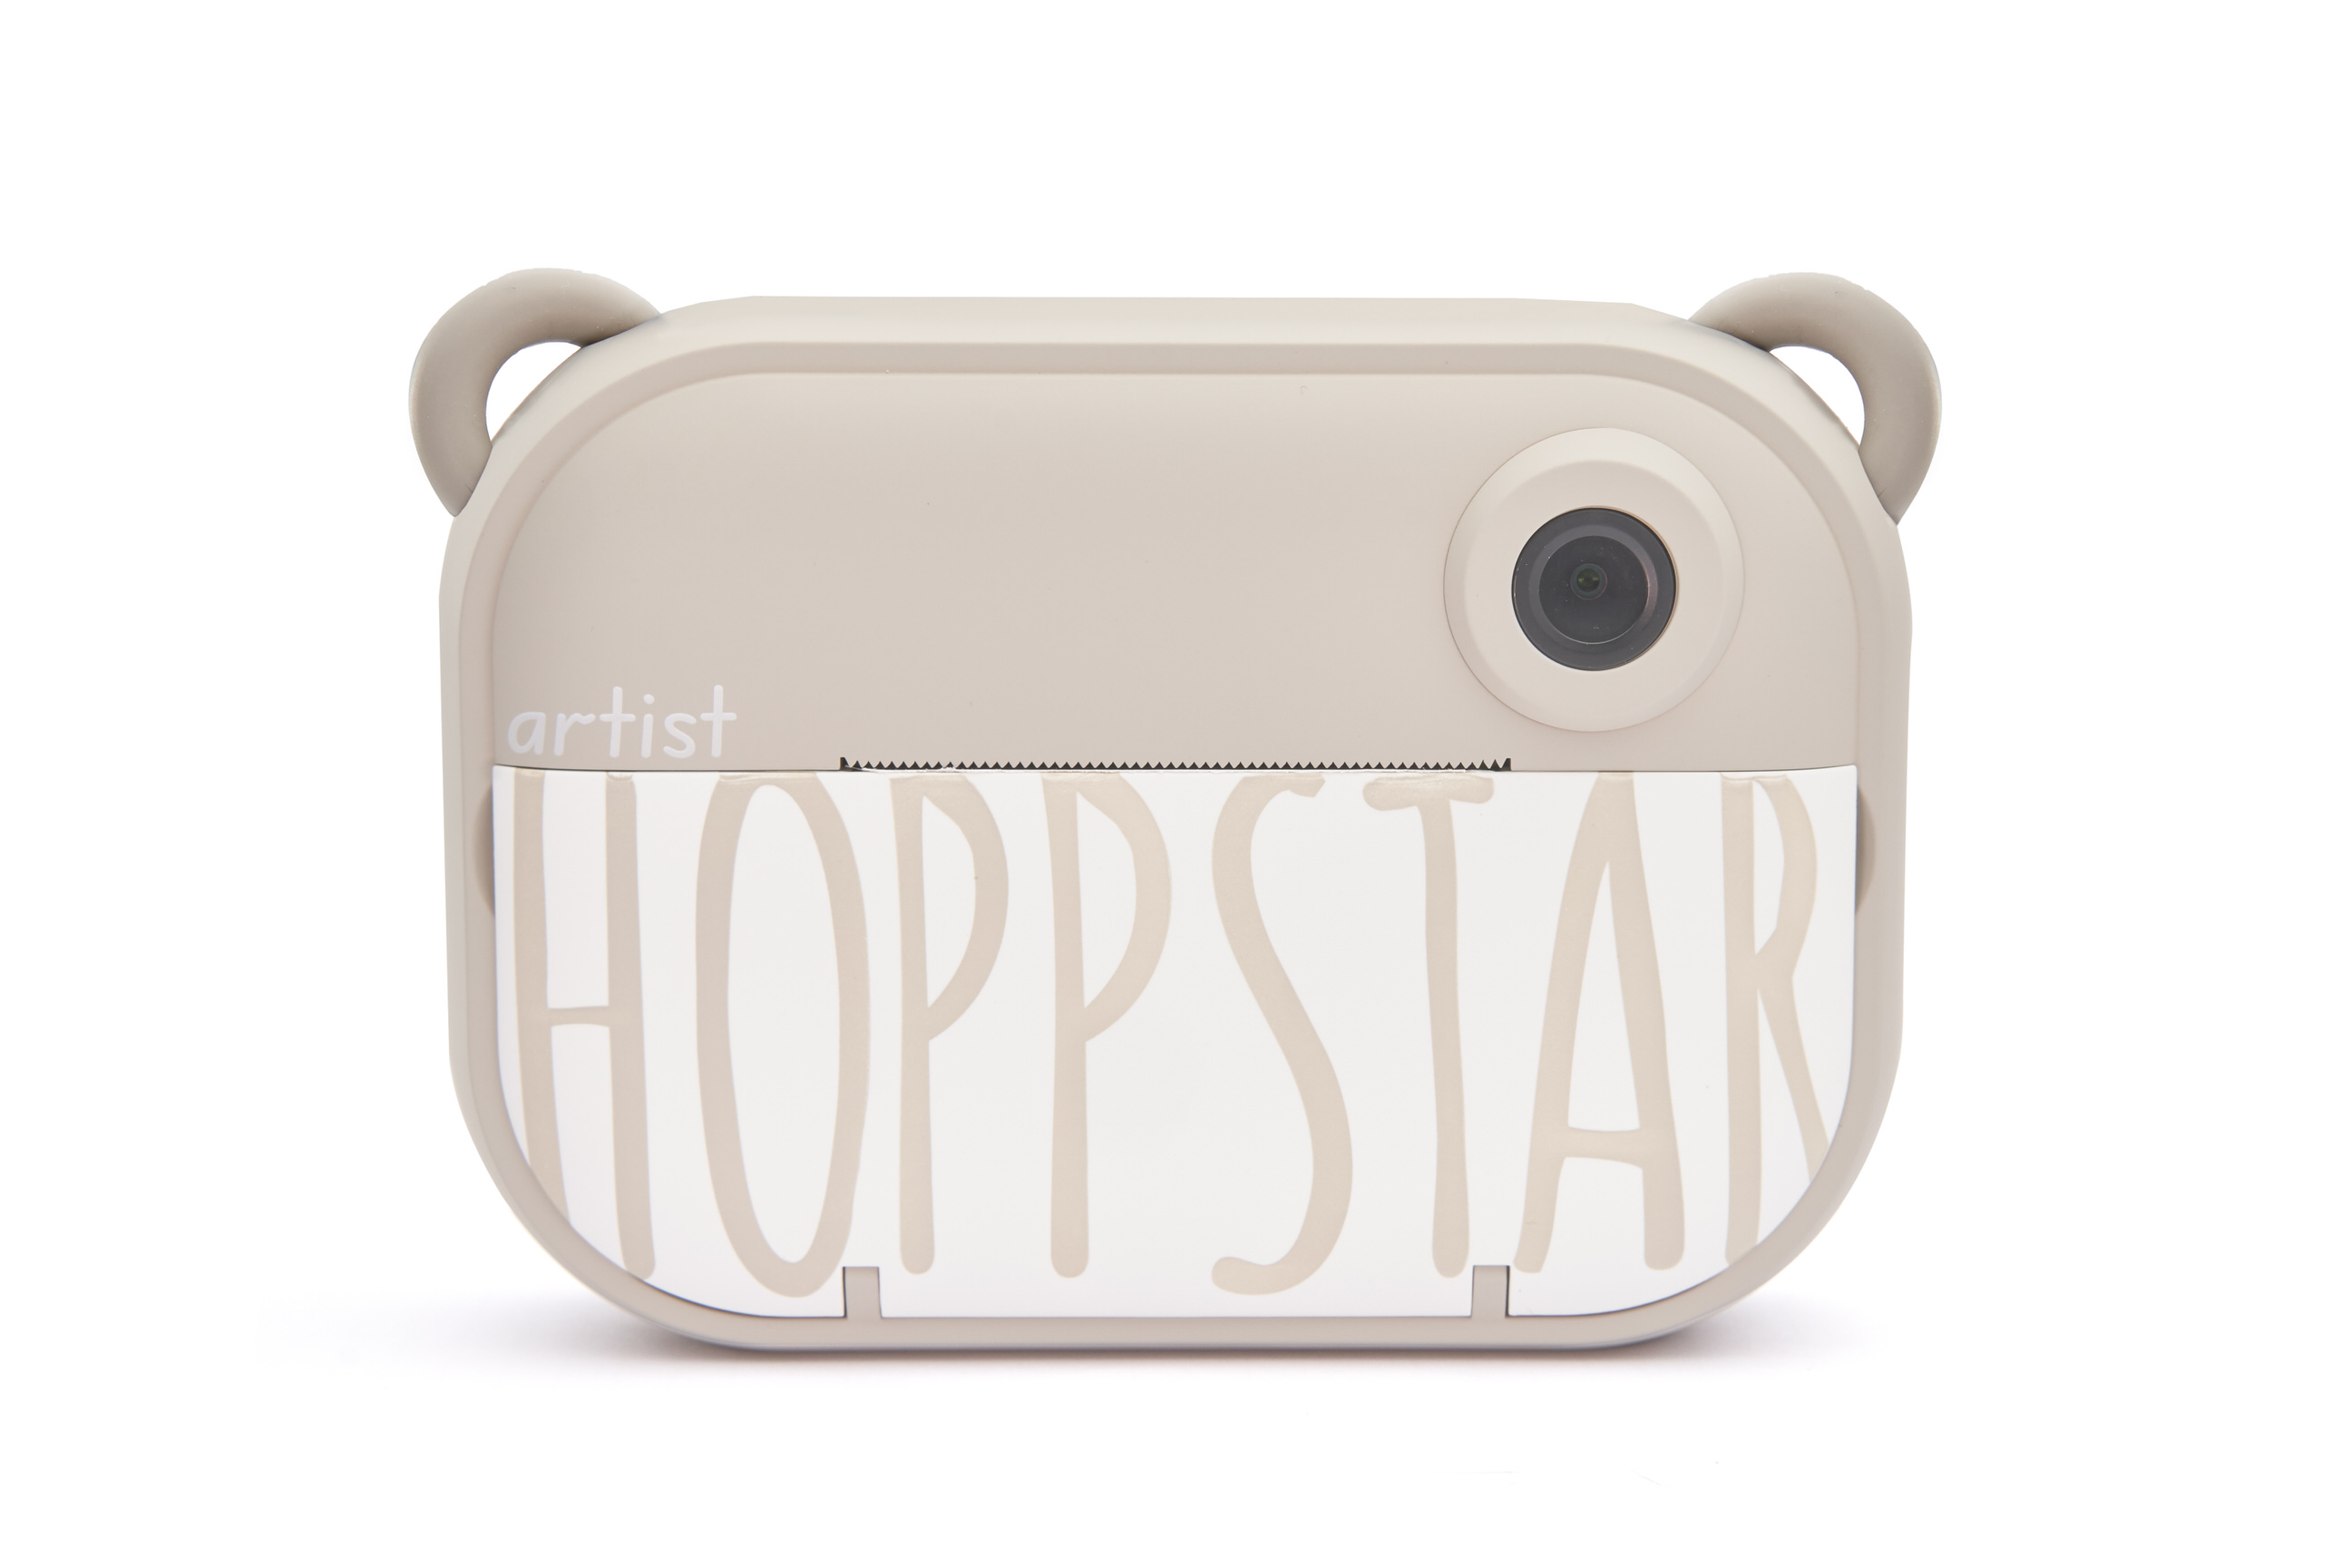 Hoppstar Artist Sofortbildkamera in der Farbe Oat (khaki), Frontalansicht